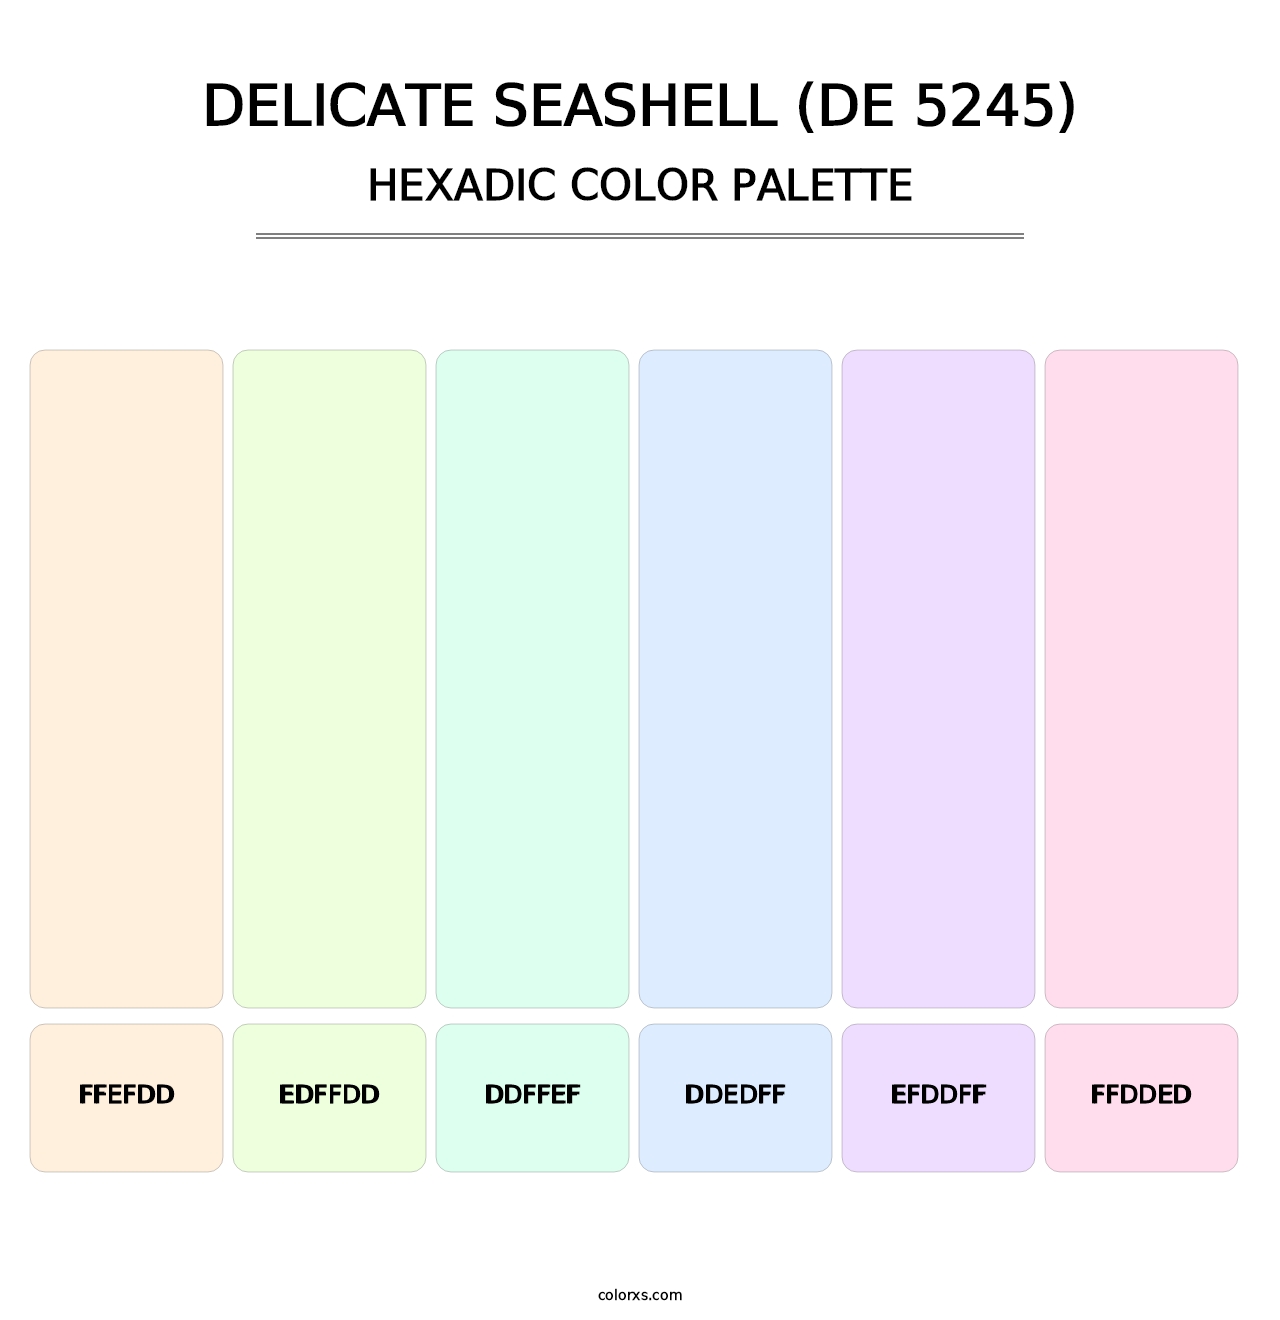 Delicate Seashell (DE 5245) - Hexadic Color Palette